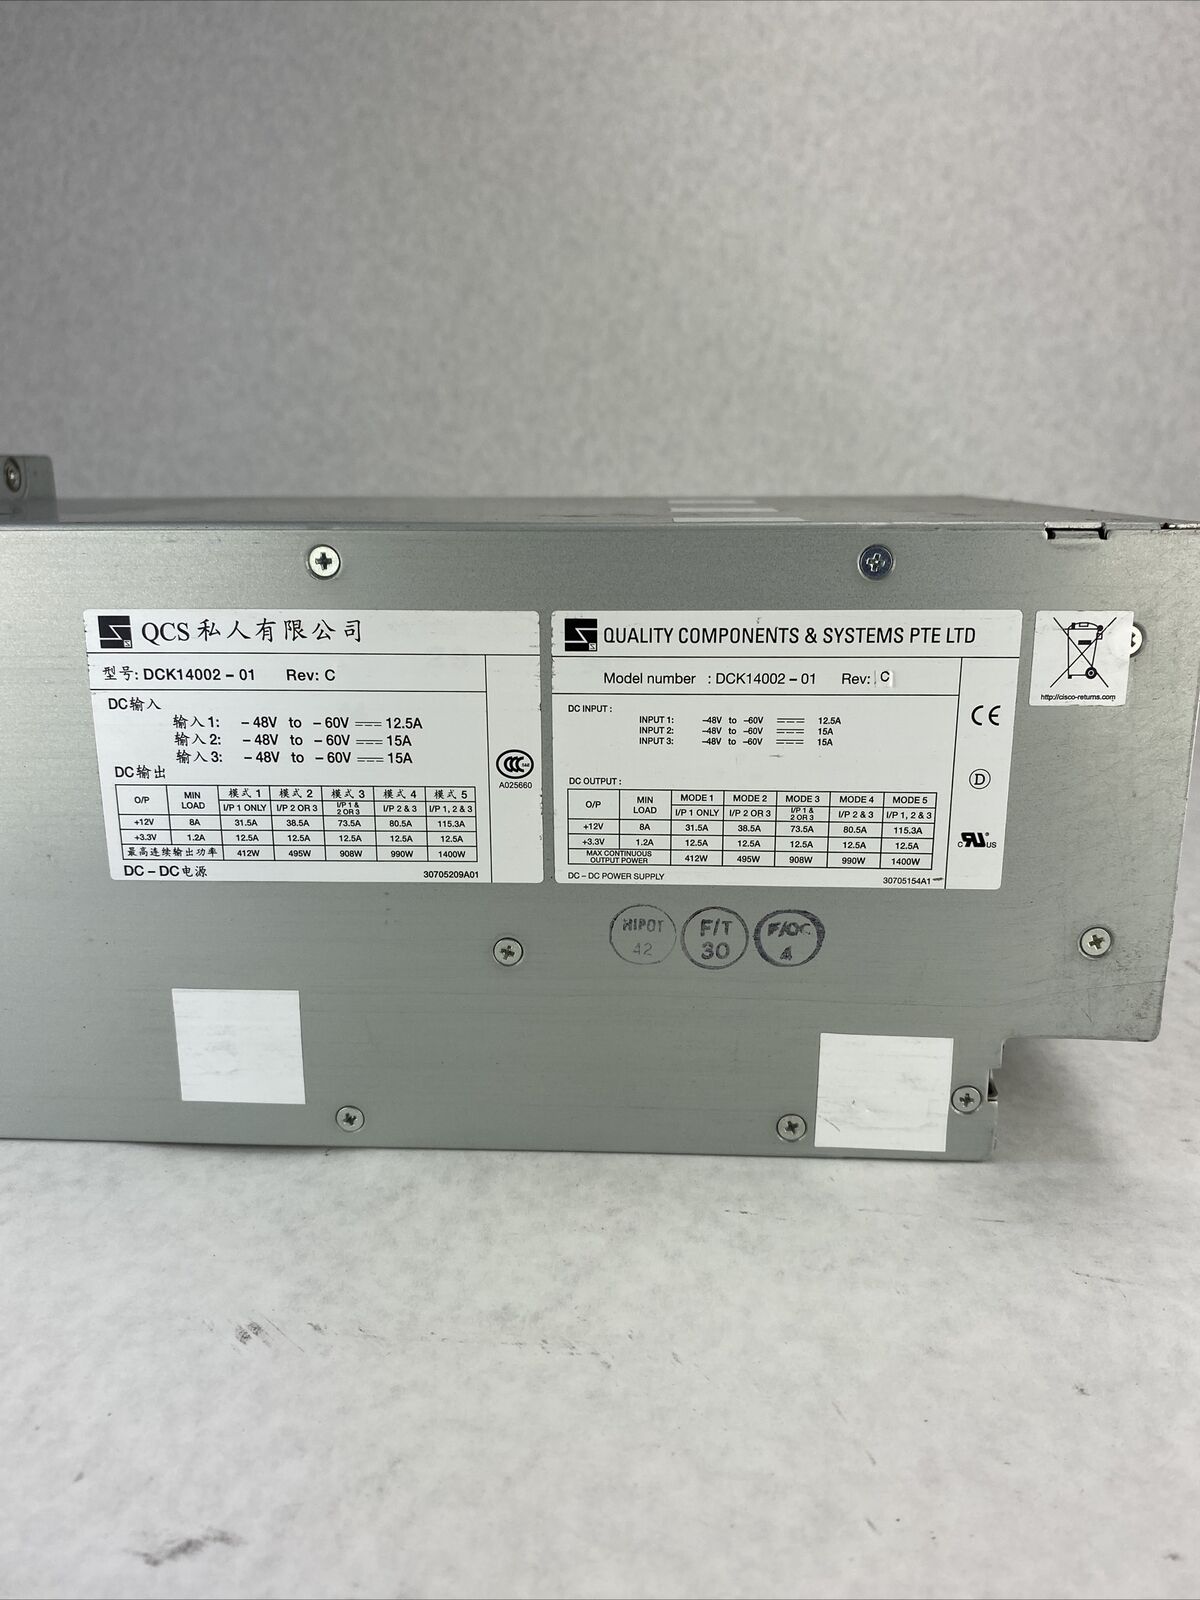 QCS DCK14002 -01 Rev C Power Supply 60V 15A 1400W